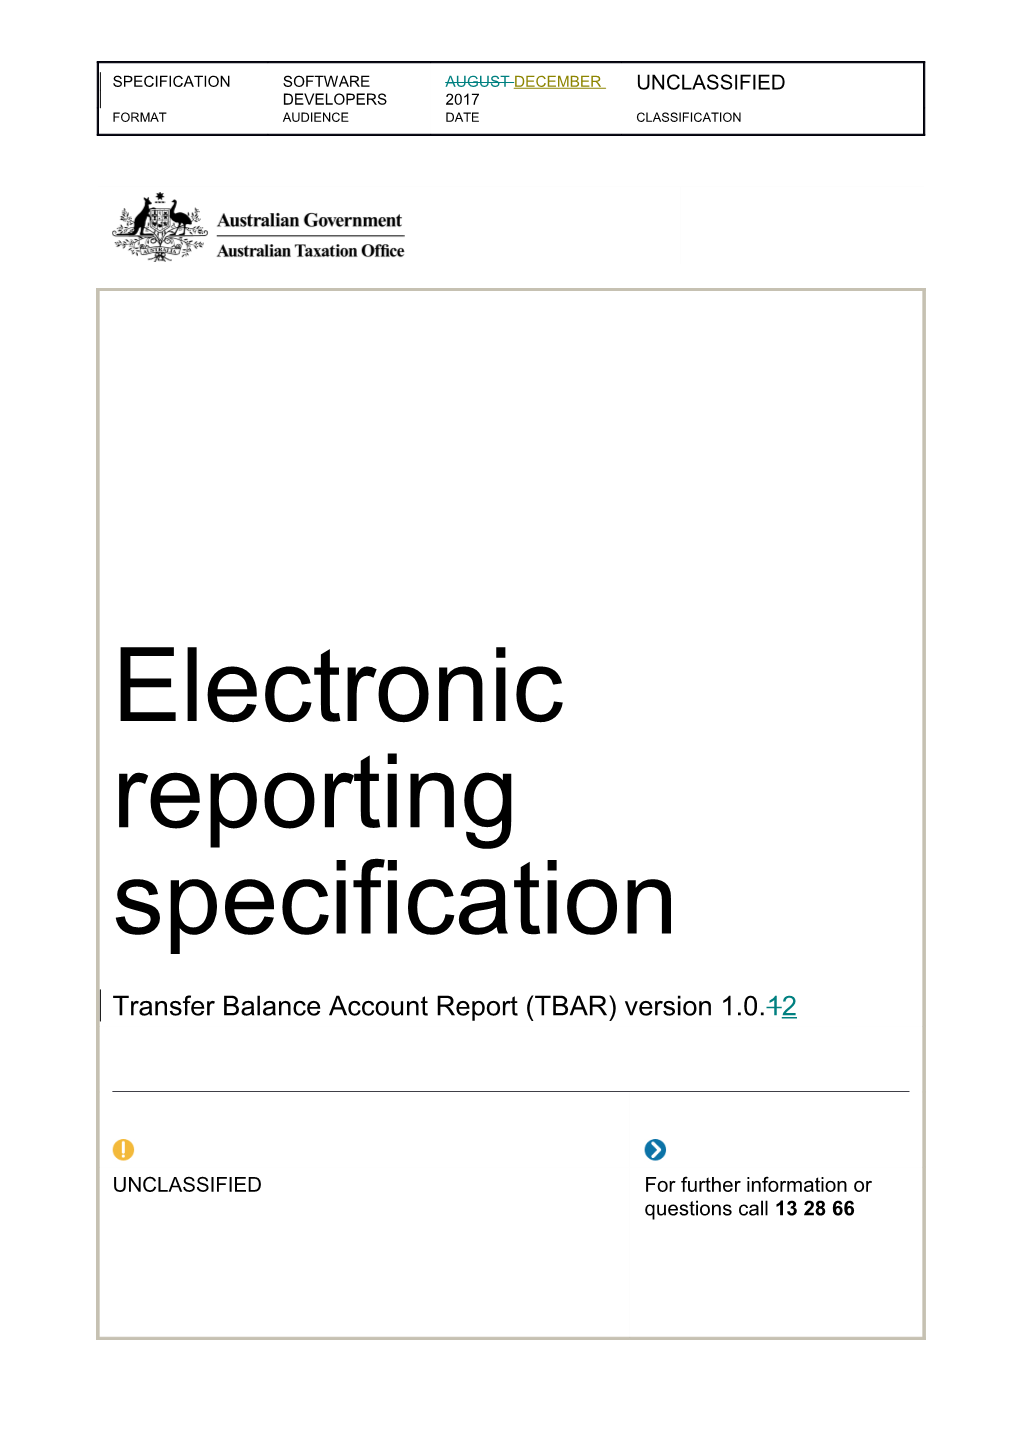 Transfer Balance Account Report (TBAR) Version 1.0.2